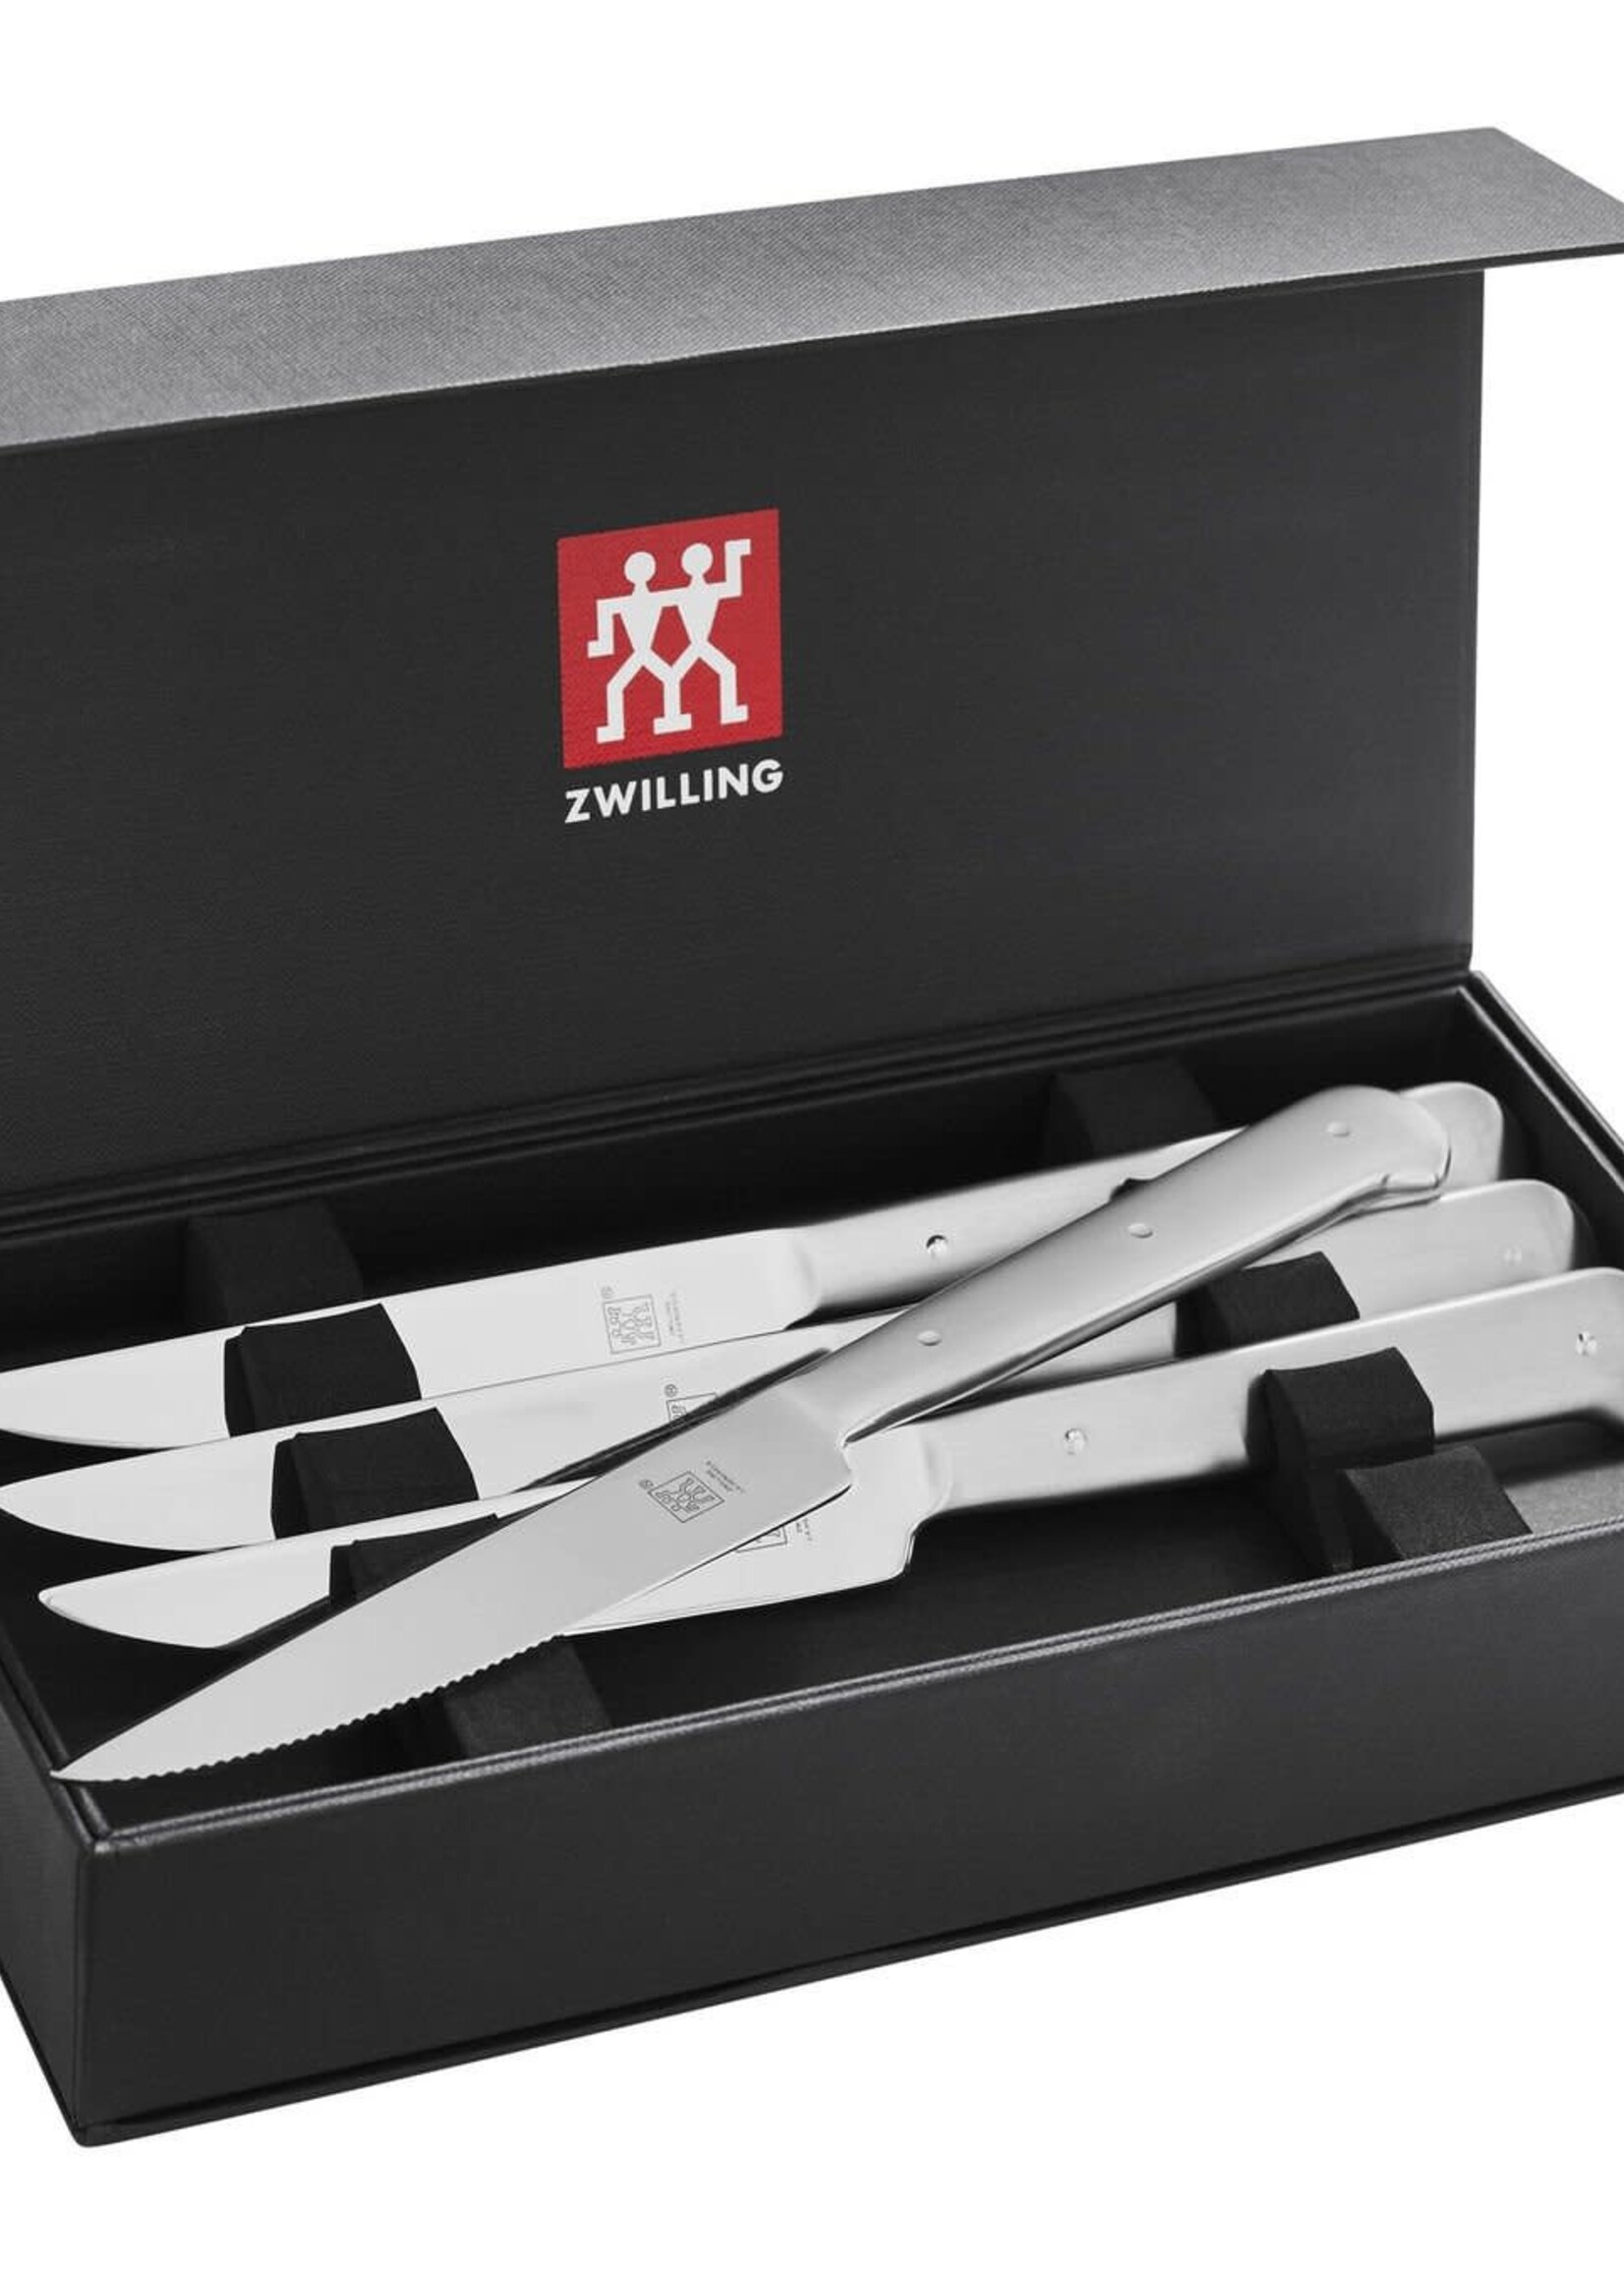 Zwilling GB Porterhouse Stainless Steel Steak Knife 8pc Set